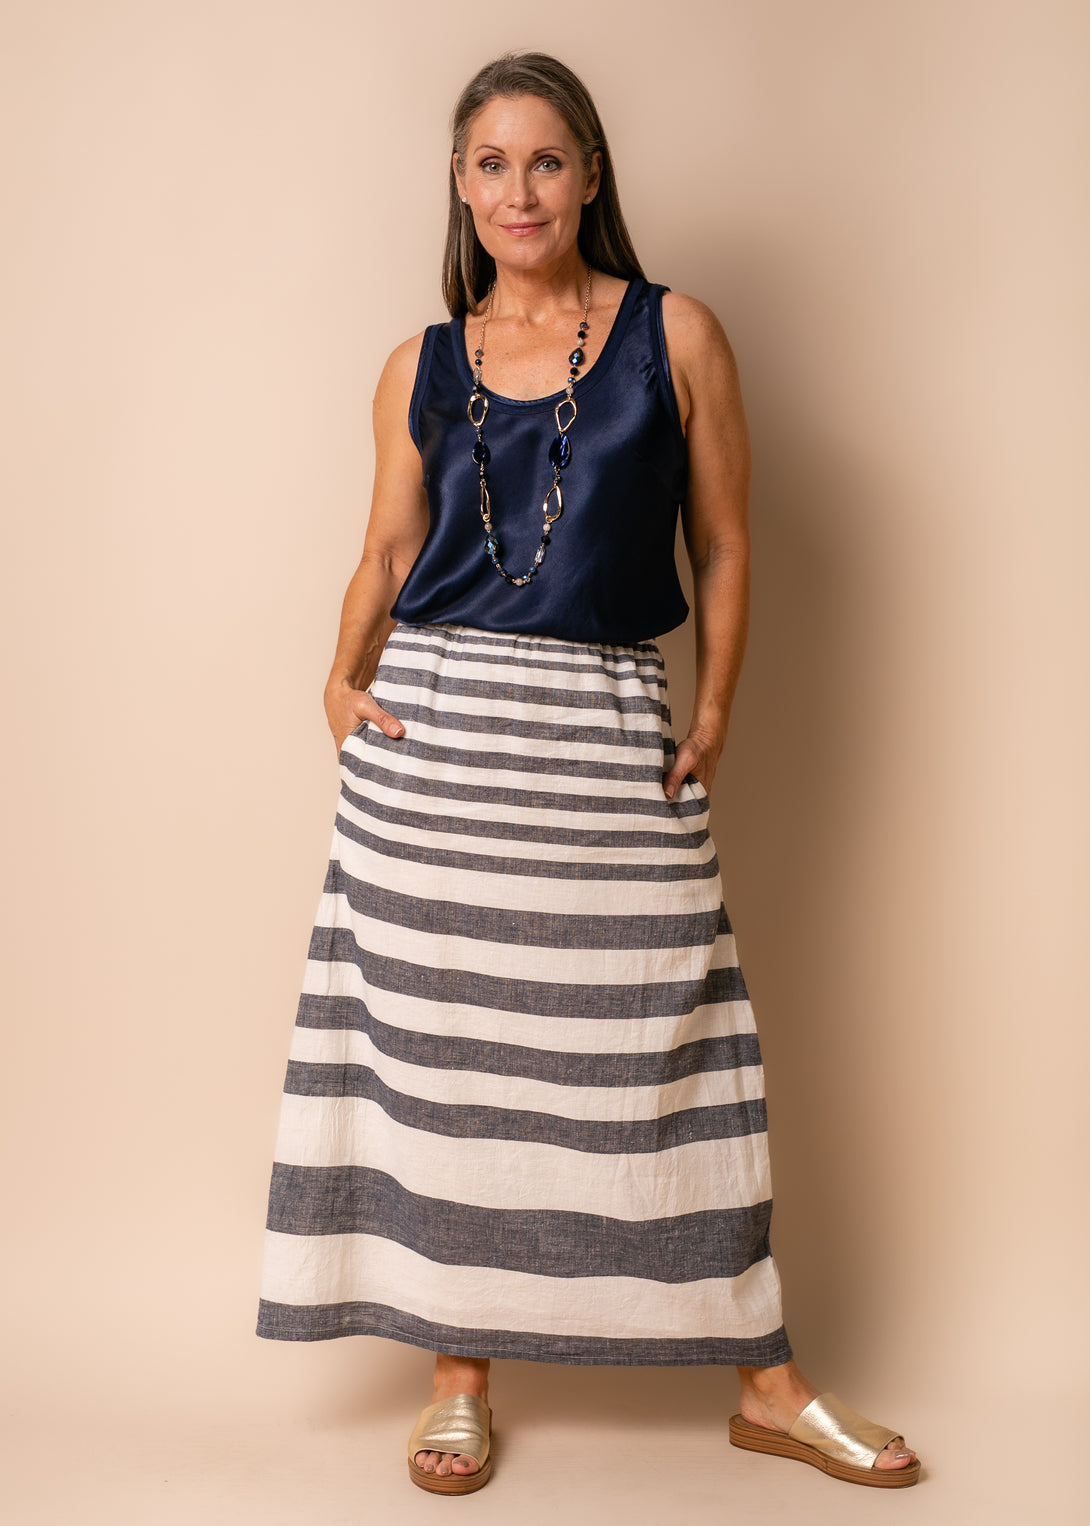 Sinclair Linen Blend Skirt in Navy - Imagine Fashion